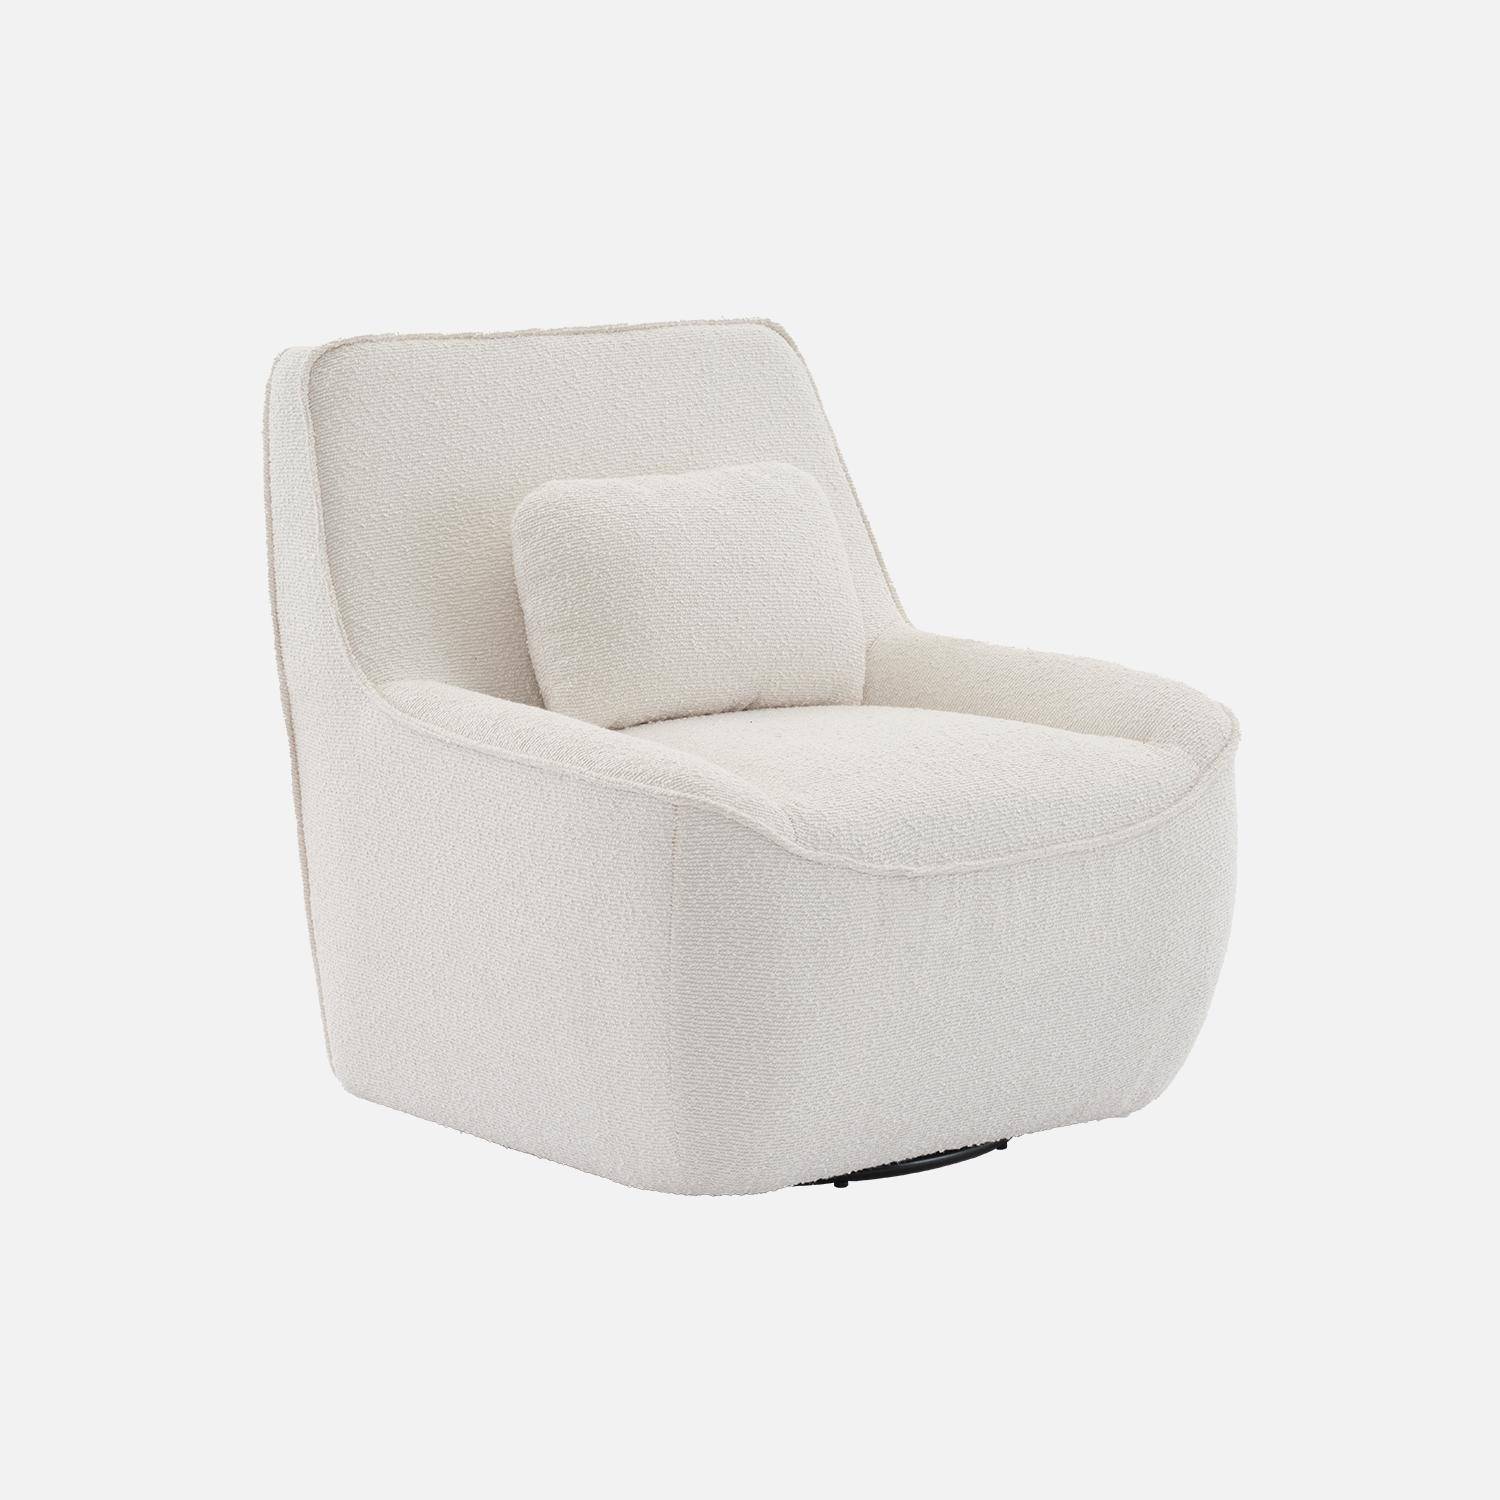 360° draaibare fauteuil in wit bouclé afneembaar kussen, Lounge, B 83 x D 83 x H 83cm Photo4